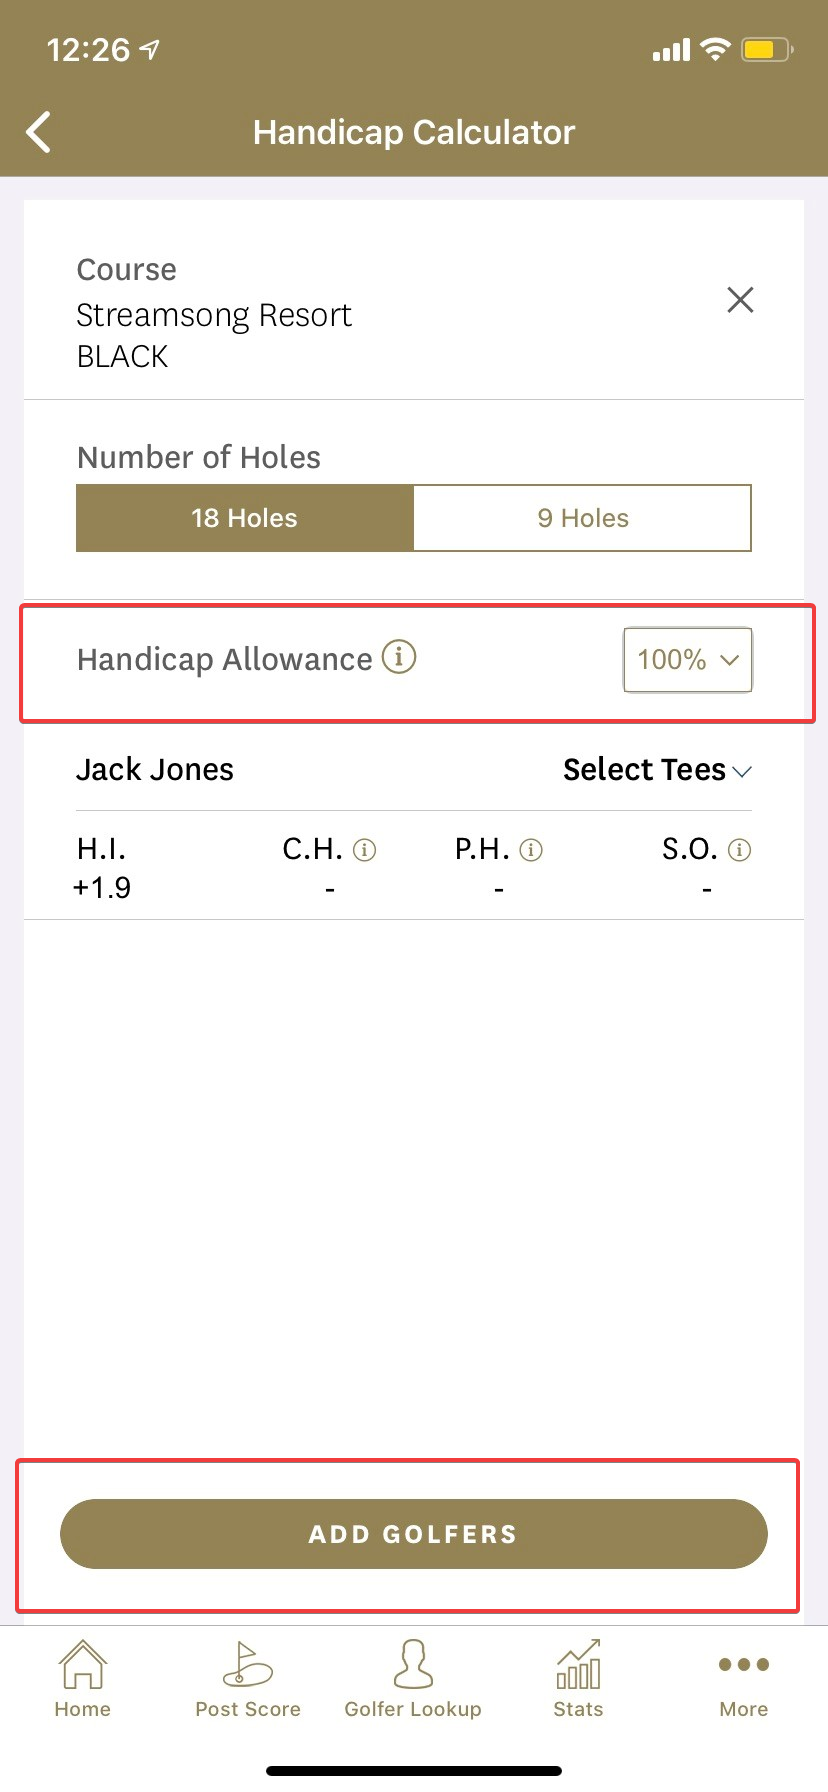 Golfer Lookup / Handicap Calculator – USGA